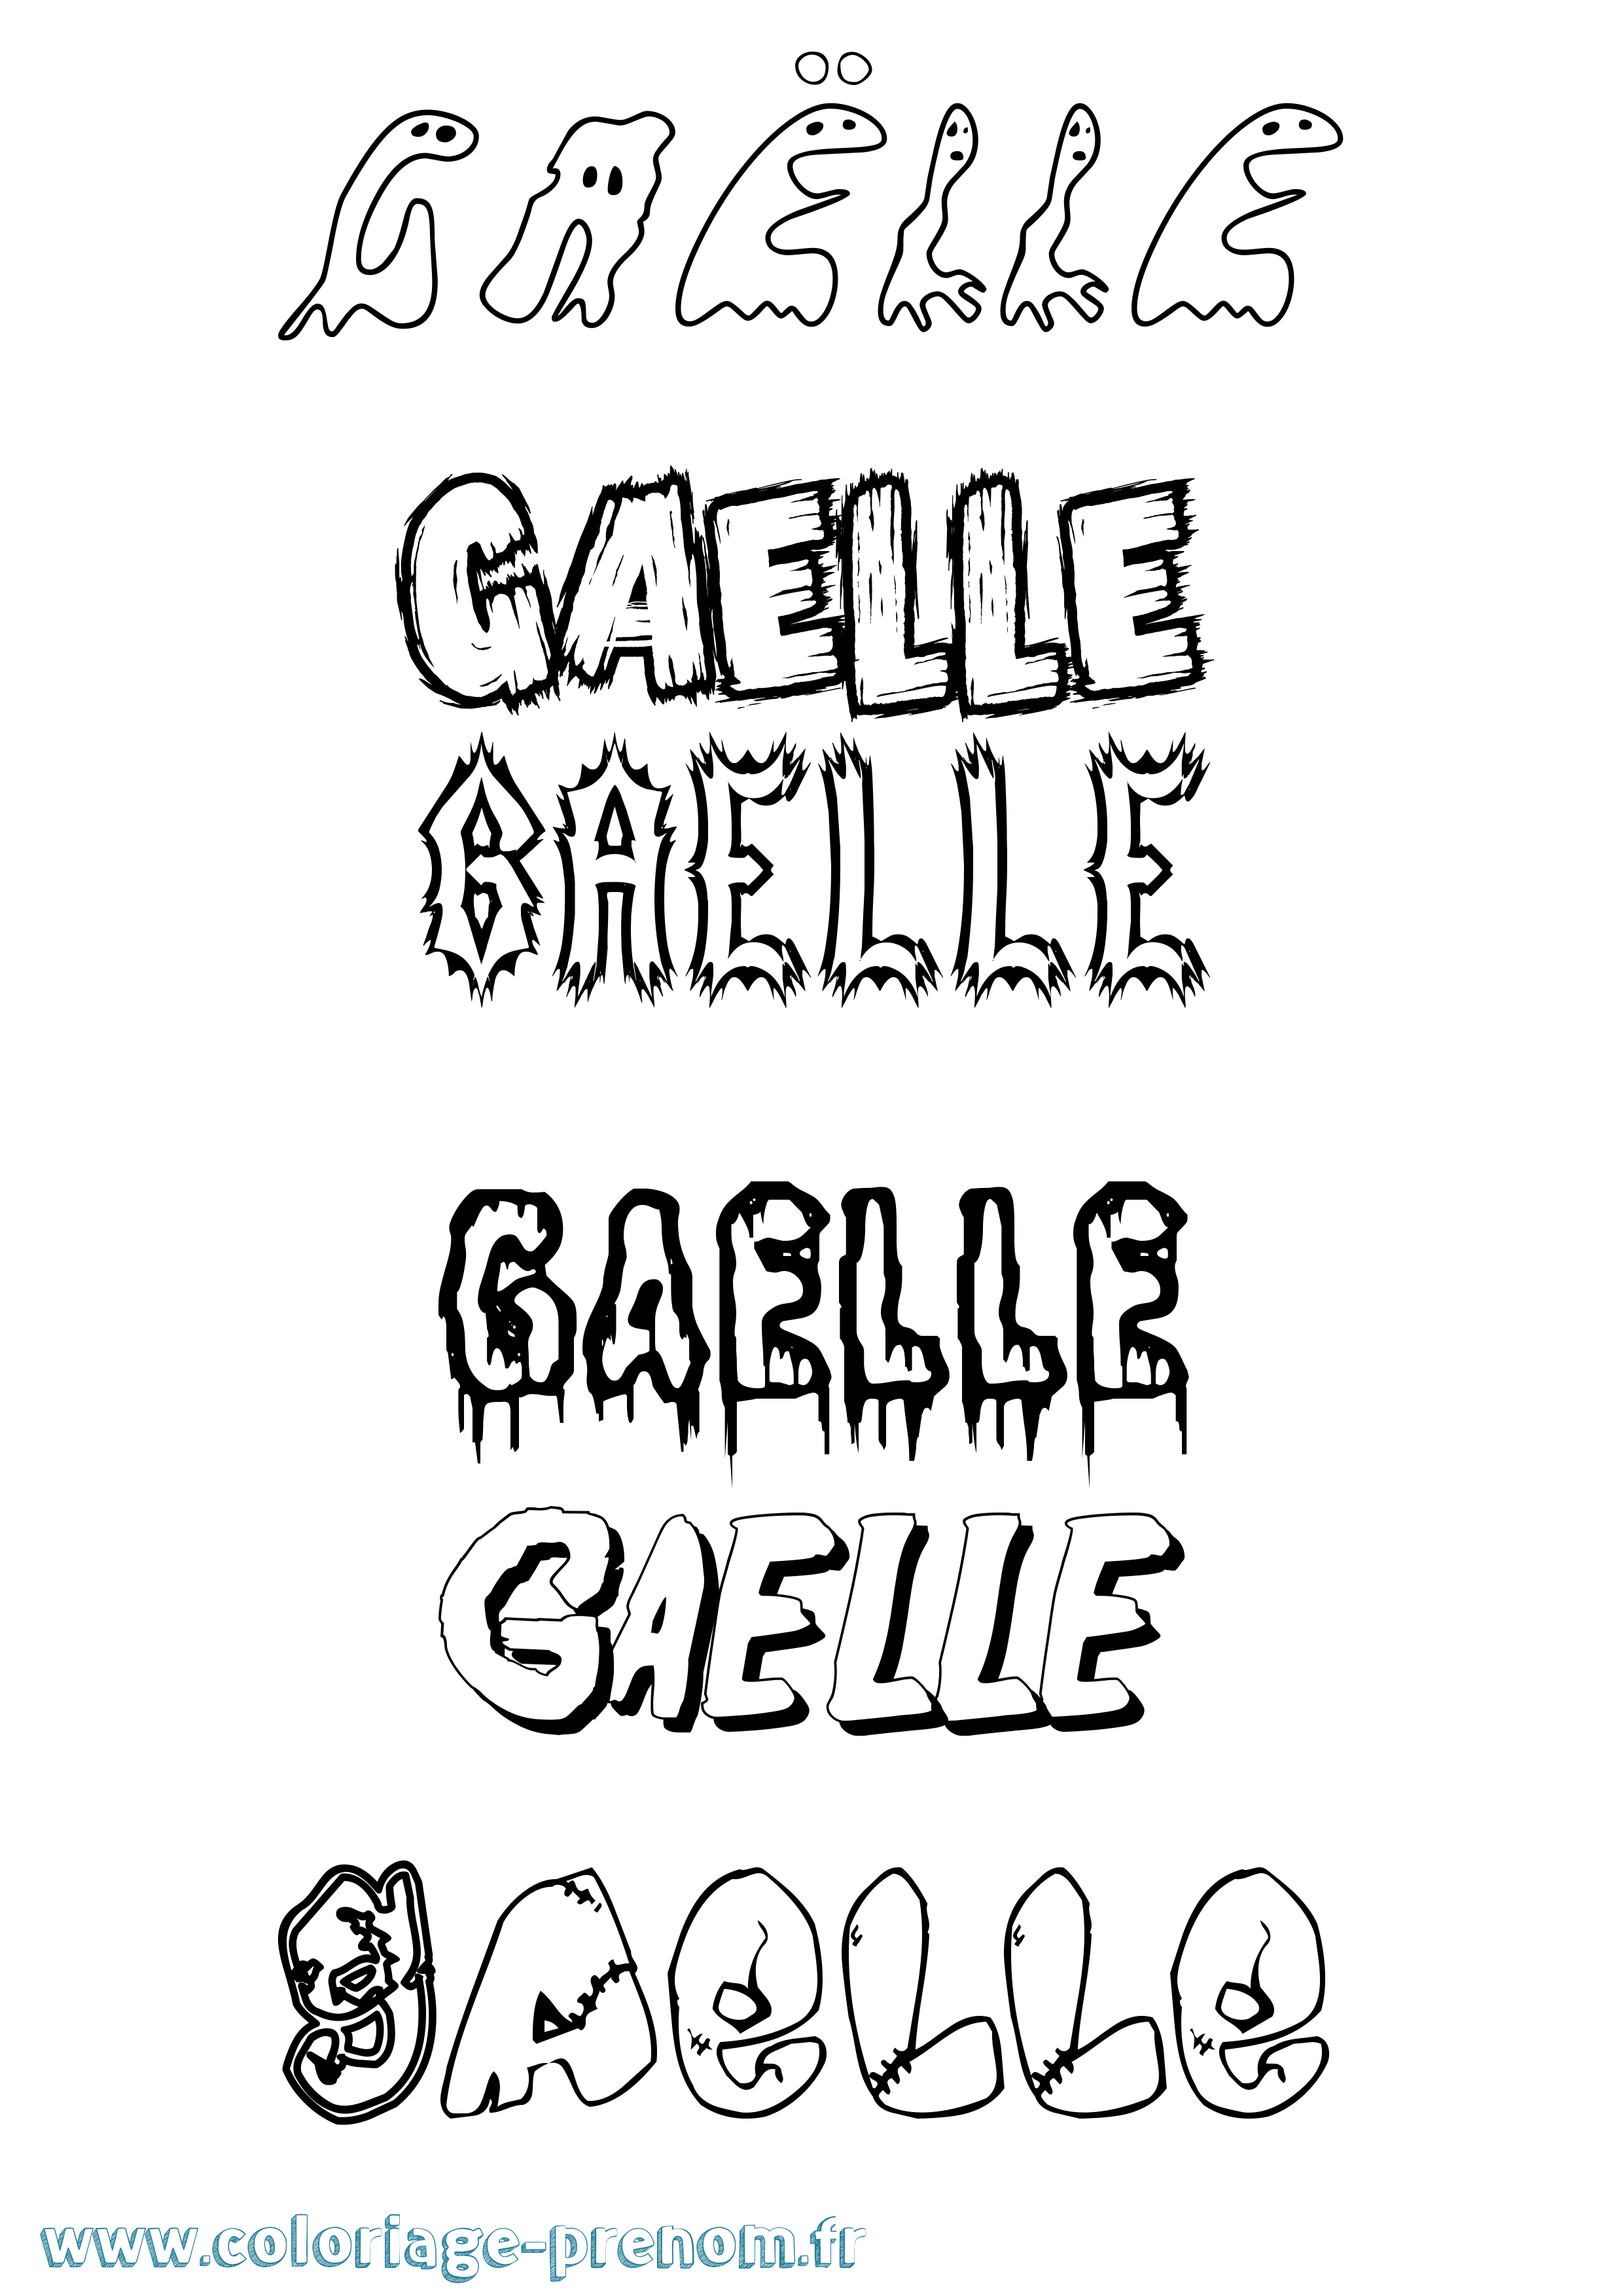 Coloriage prénom Gaëlle